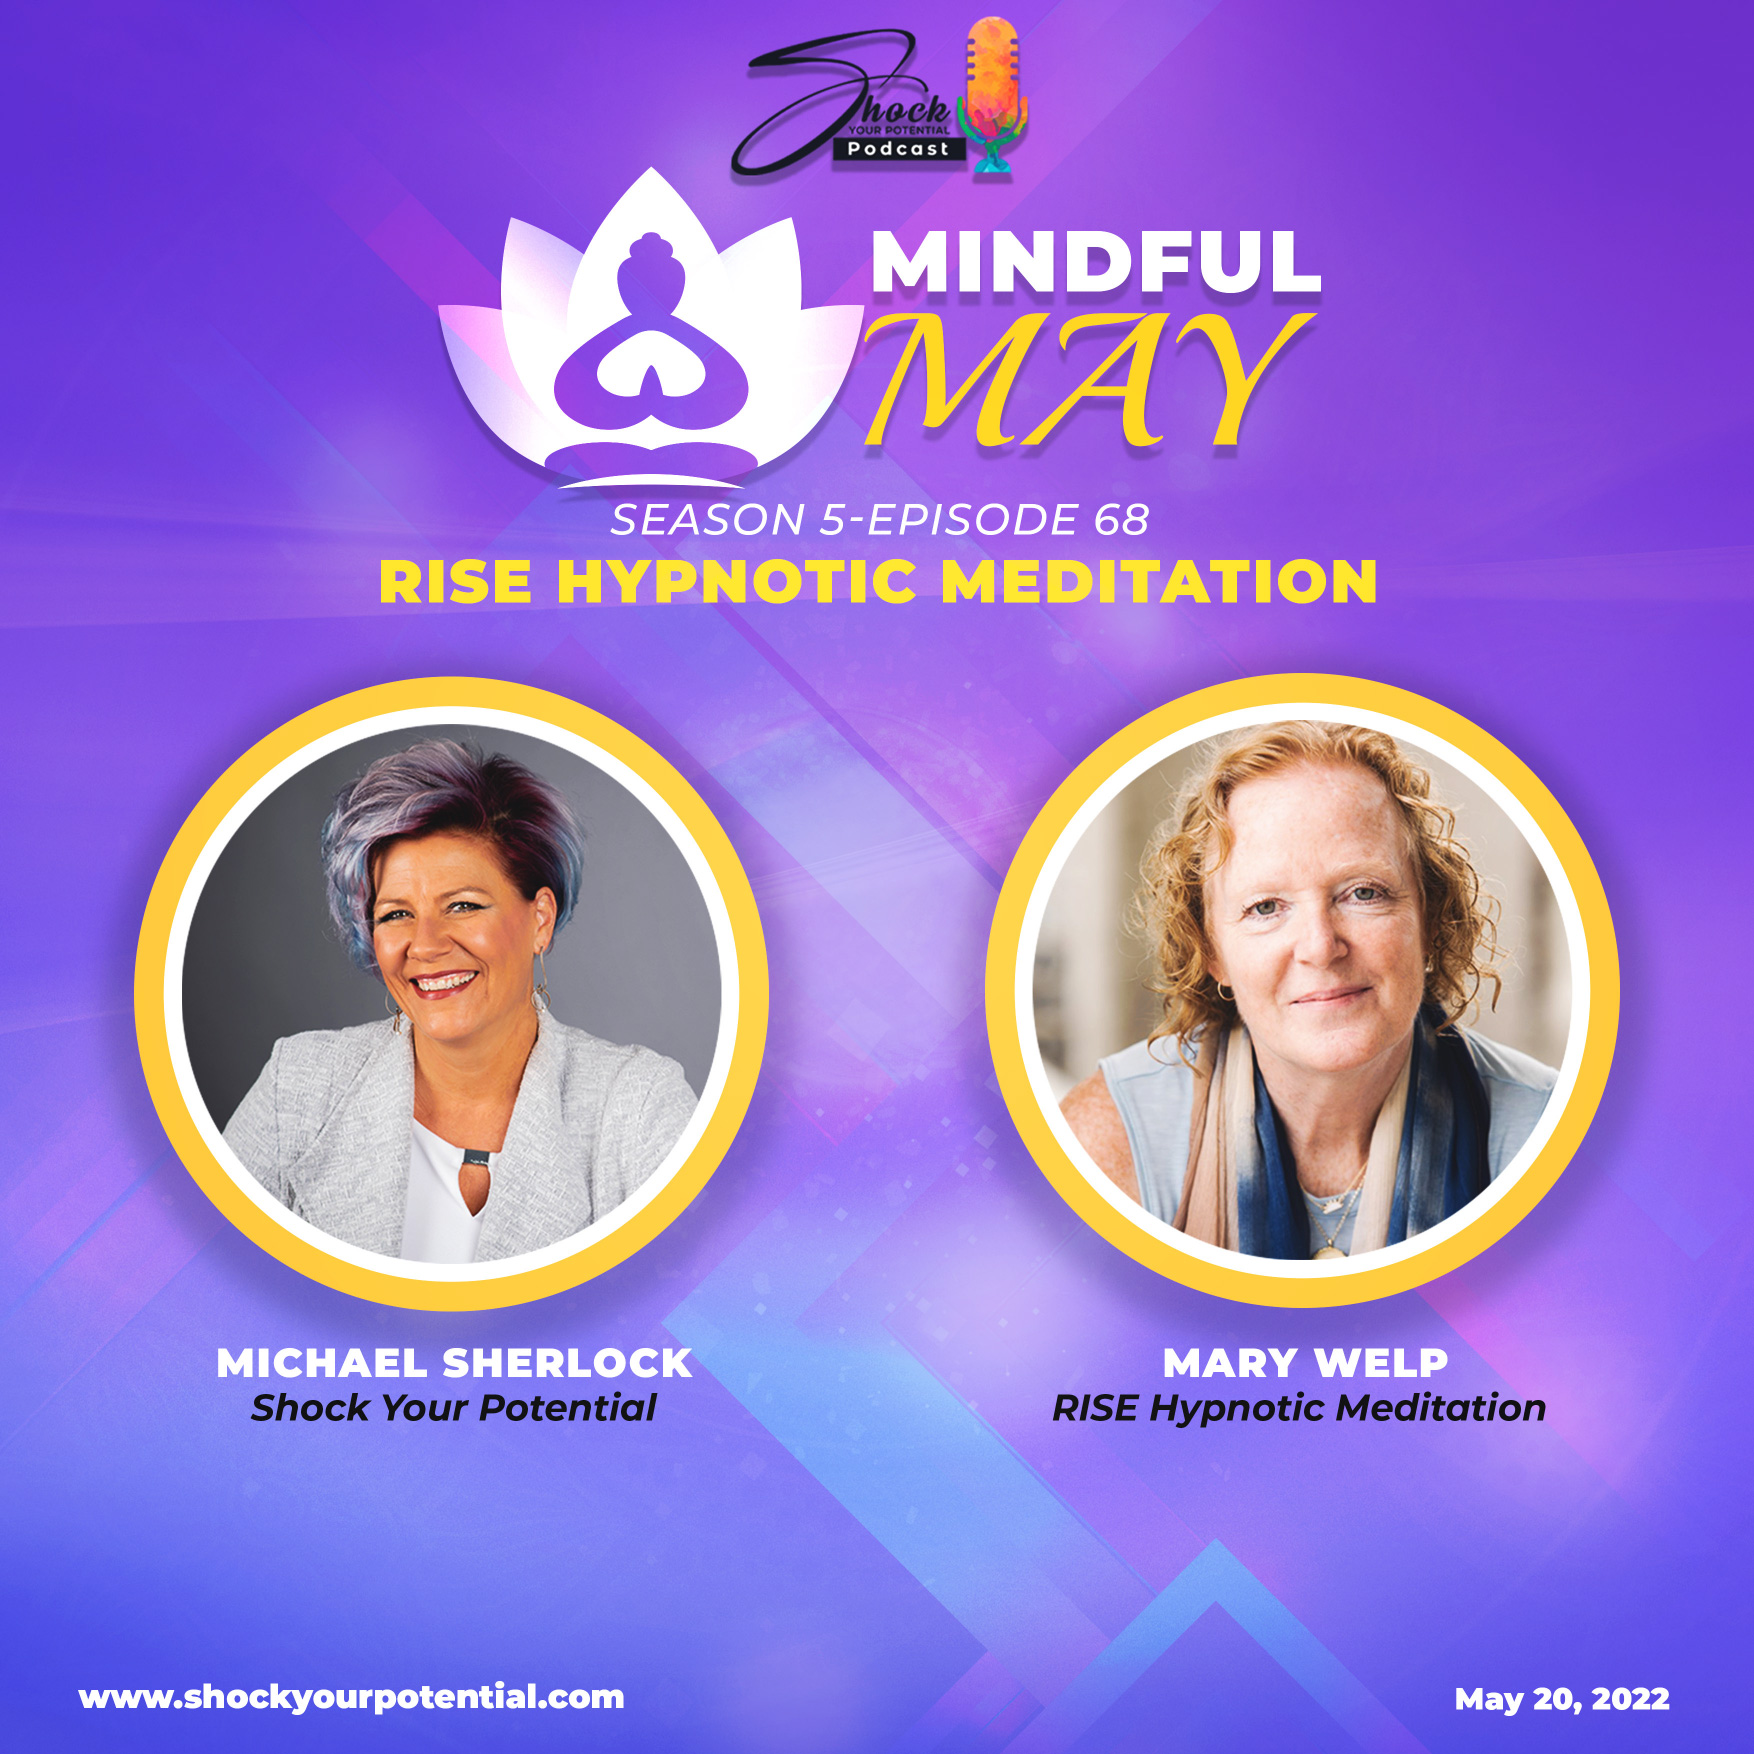 RISE Hypnotic Meditation – Mary Welp